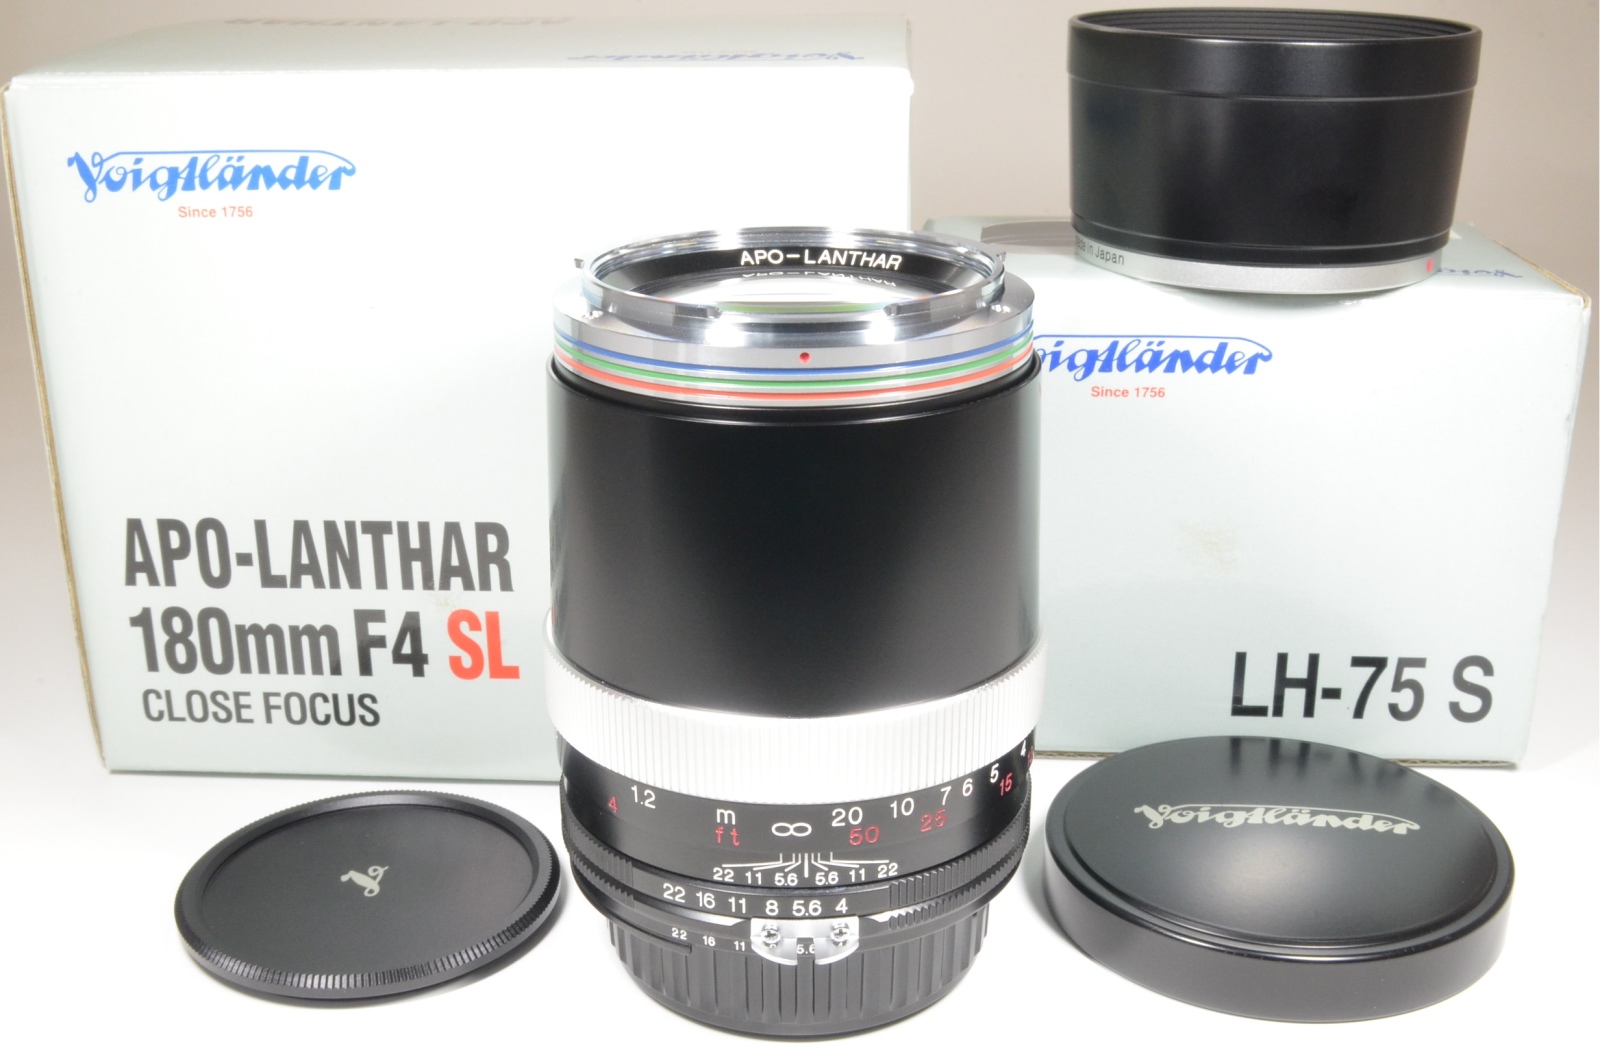 voigtlander apo-lanthar 180mm f4 sl for ai-s nikon w/ lens hood